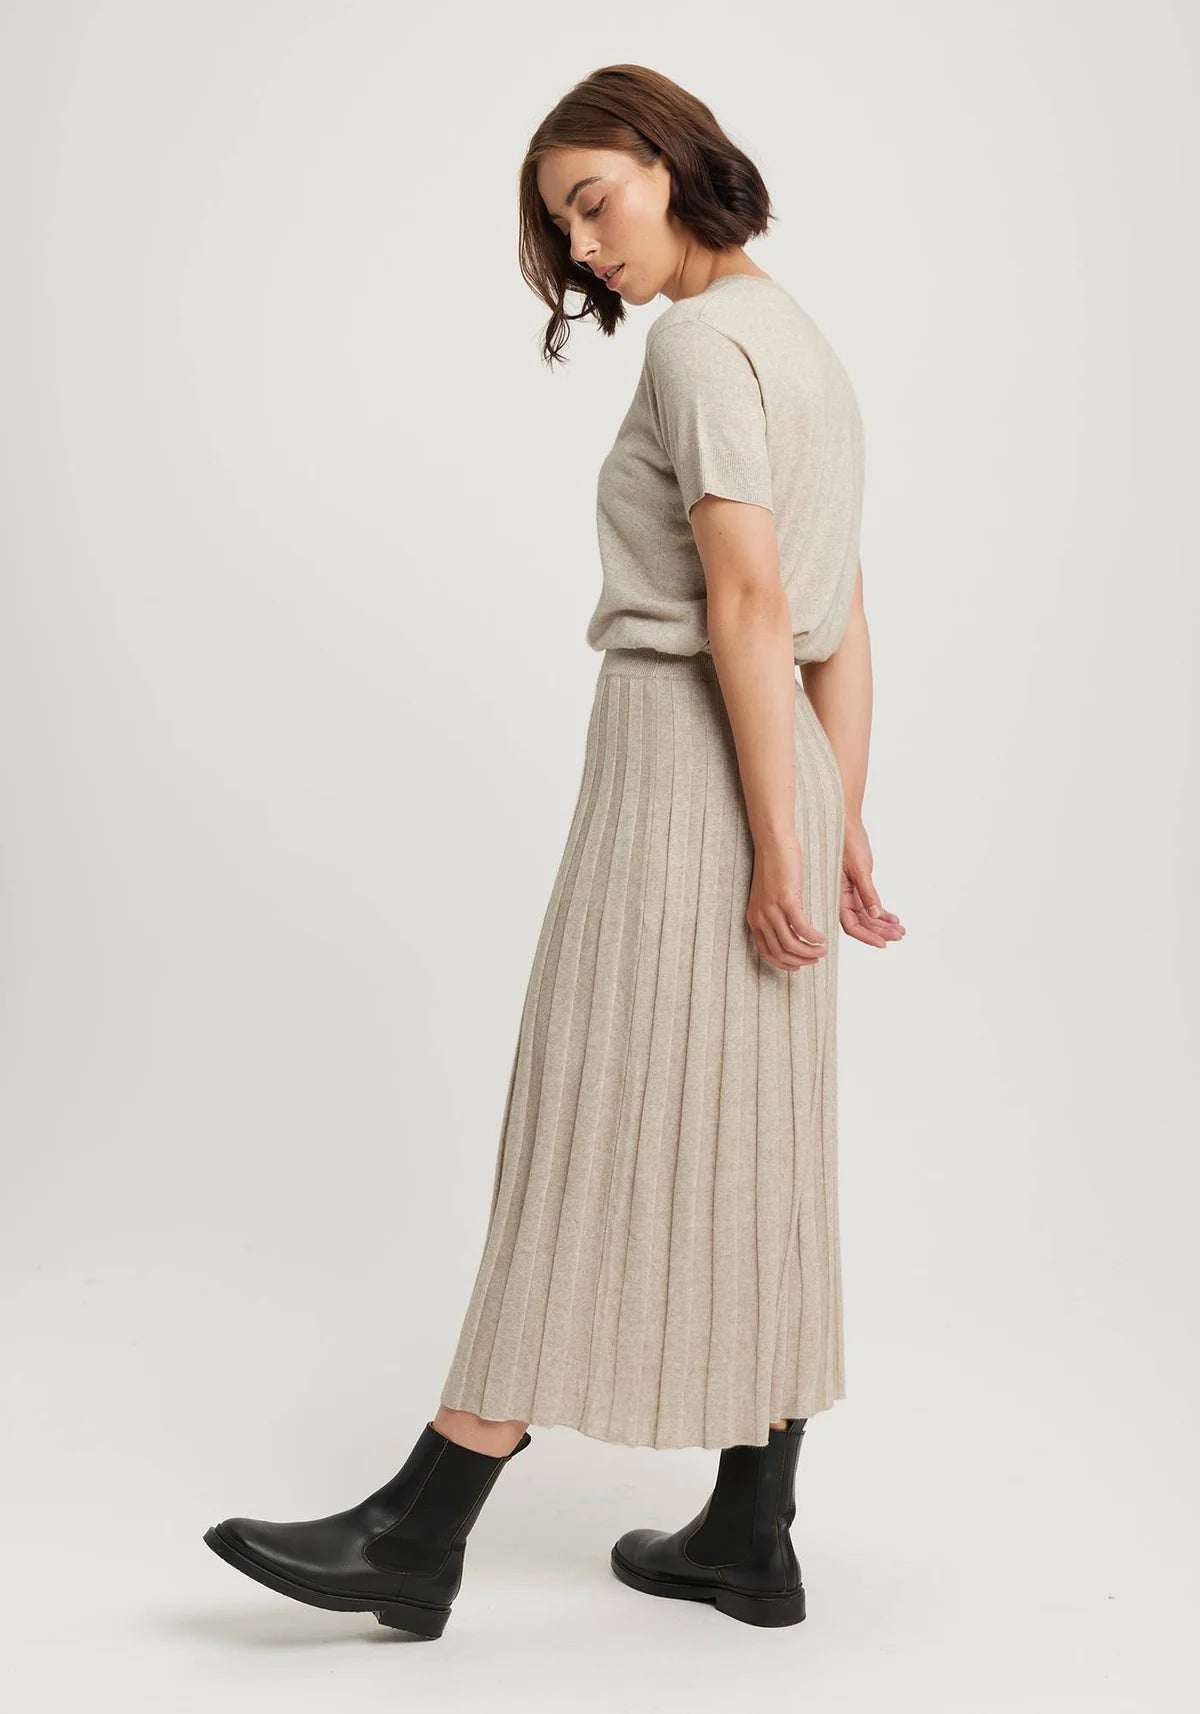 Untouched World Ella Knit Skirt - Pumice